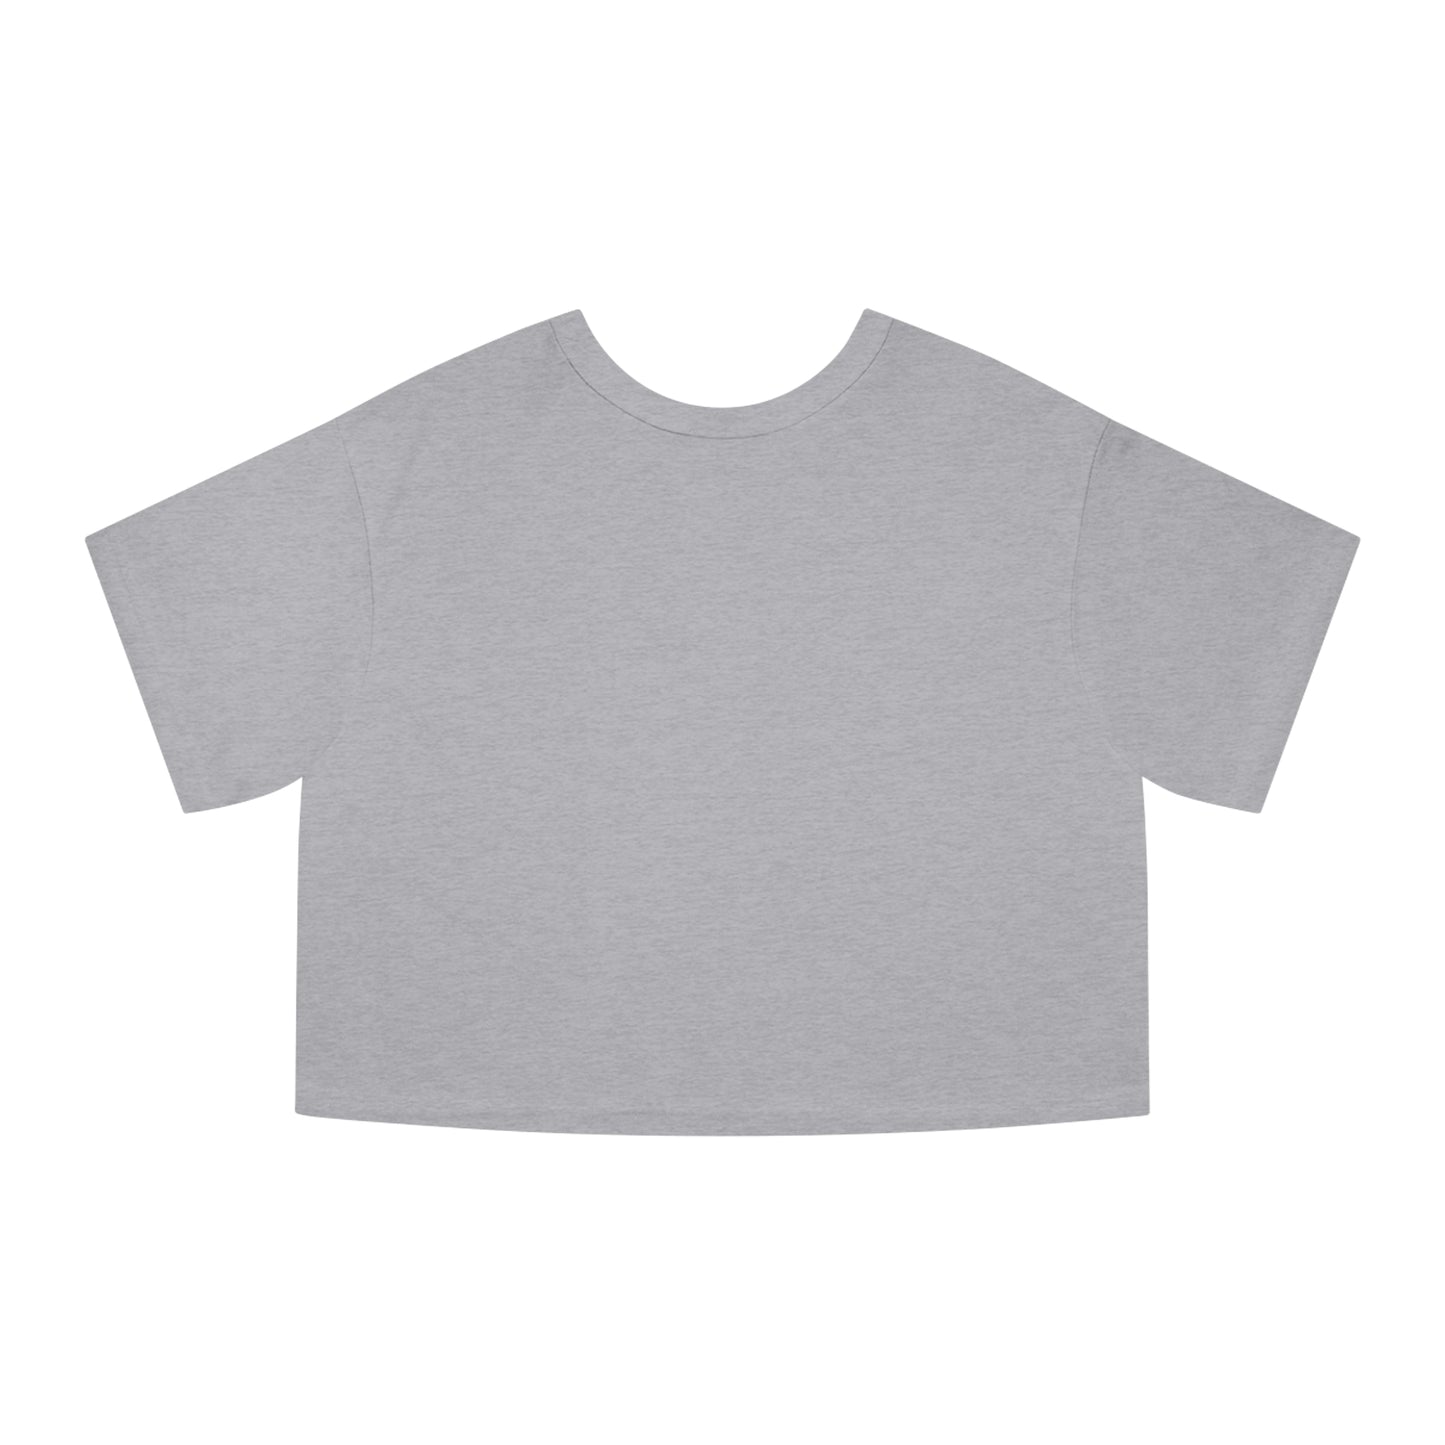 Ocean LIfe Cropped T-Shirt